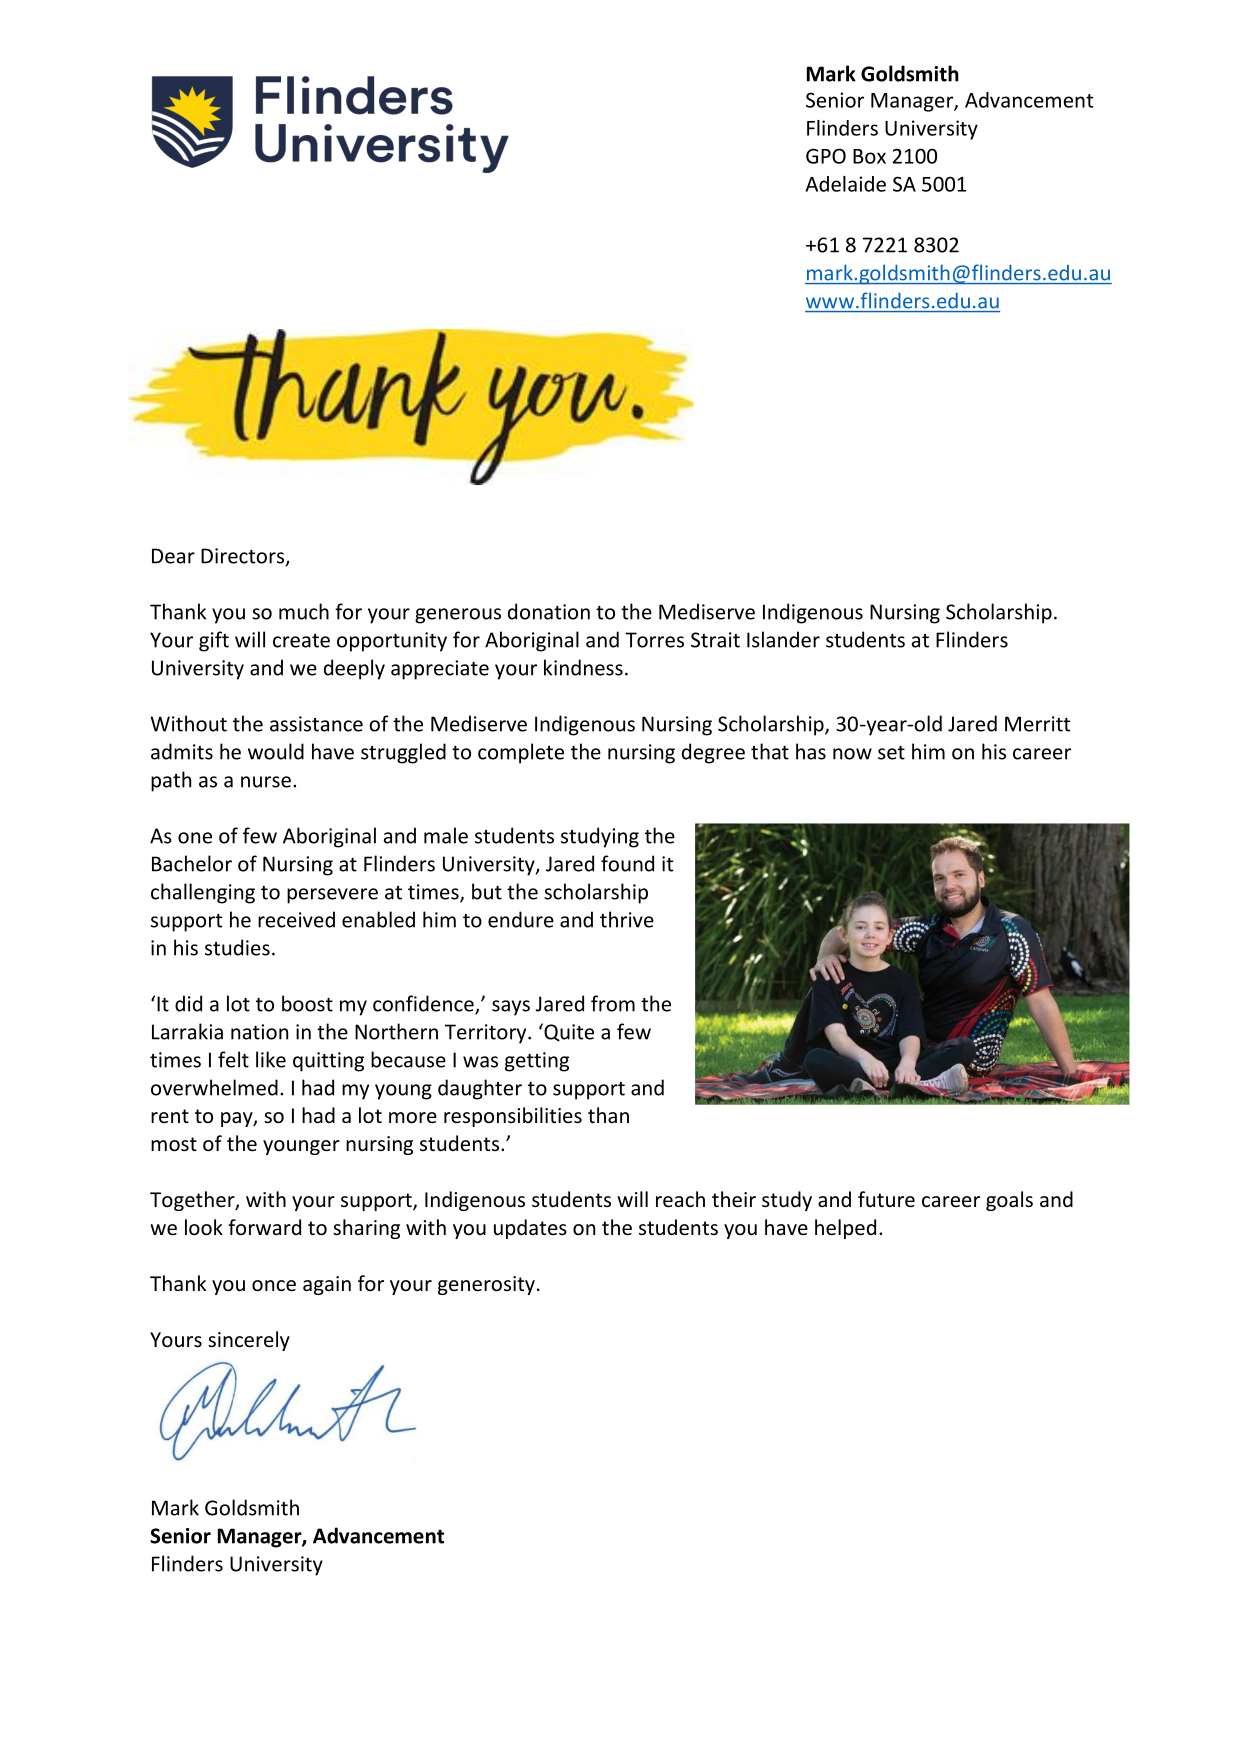 Flinders University Letter of Appreciation